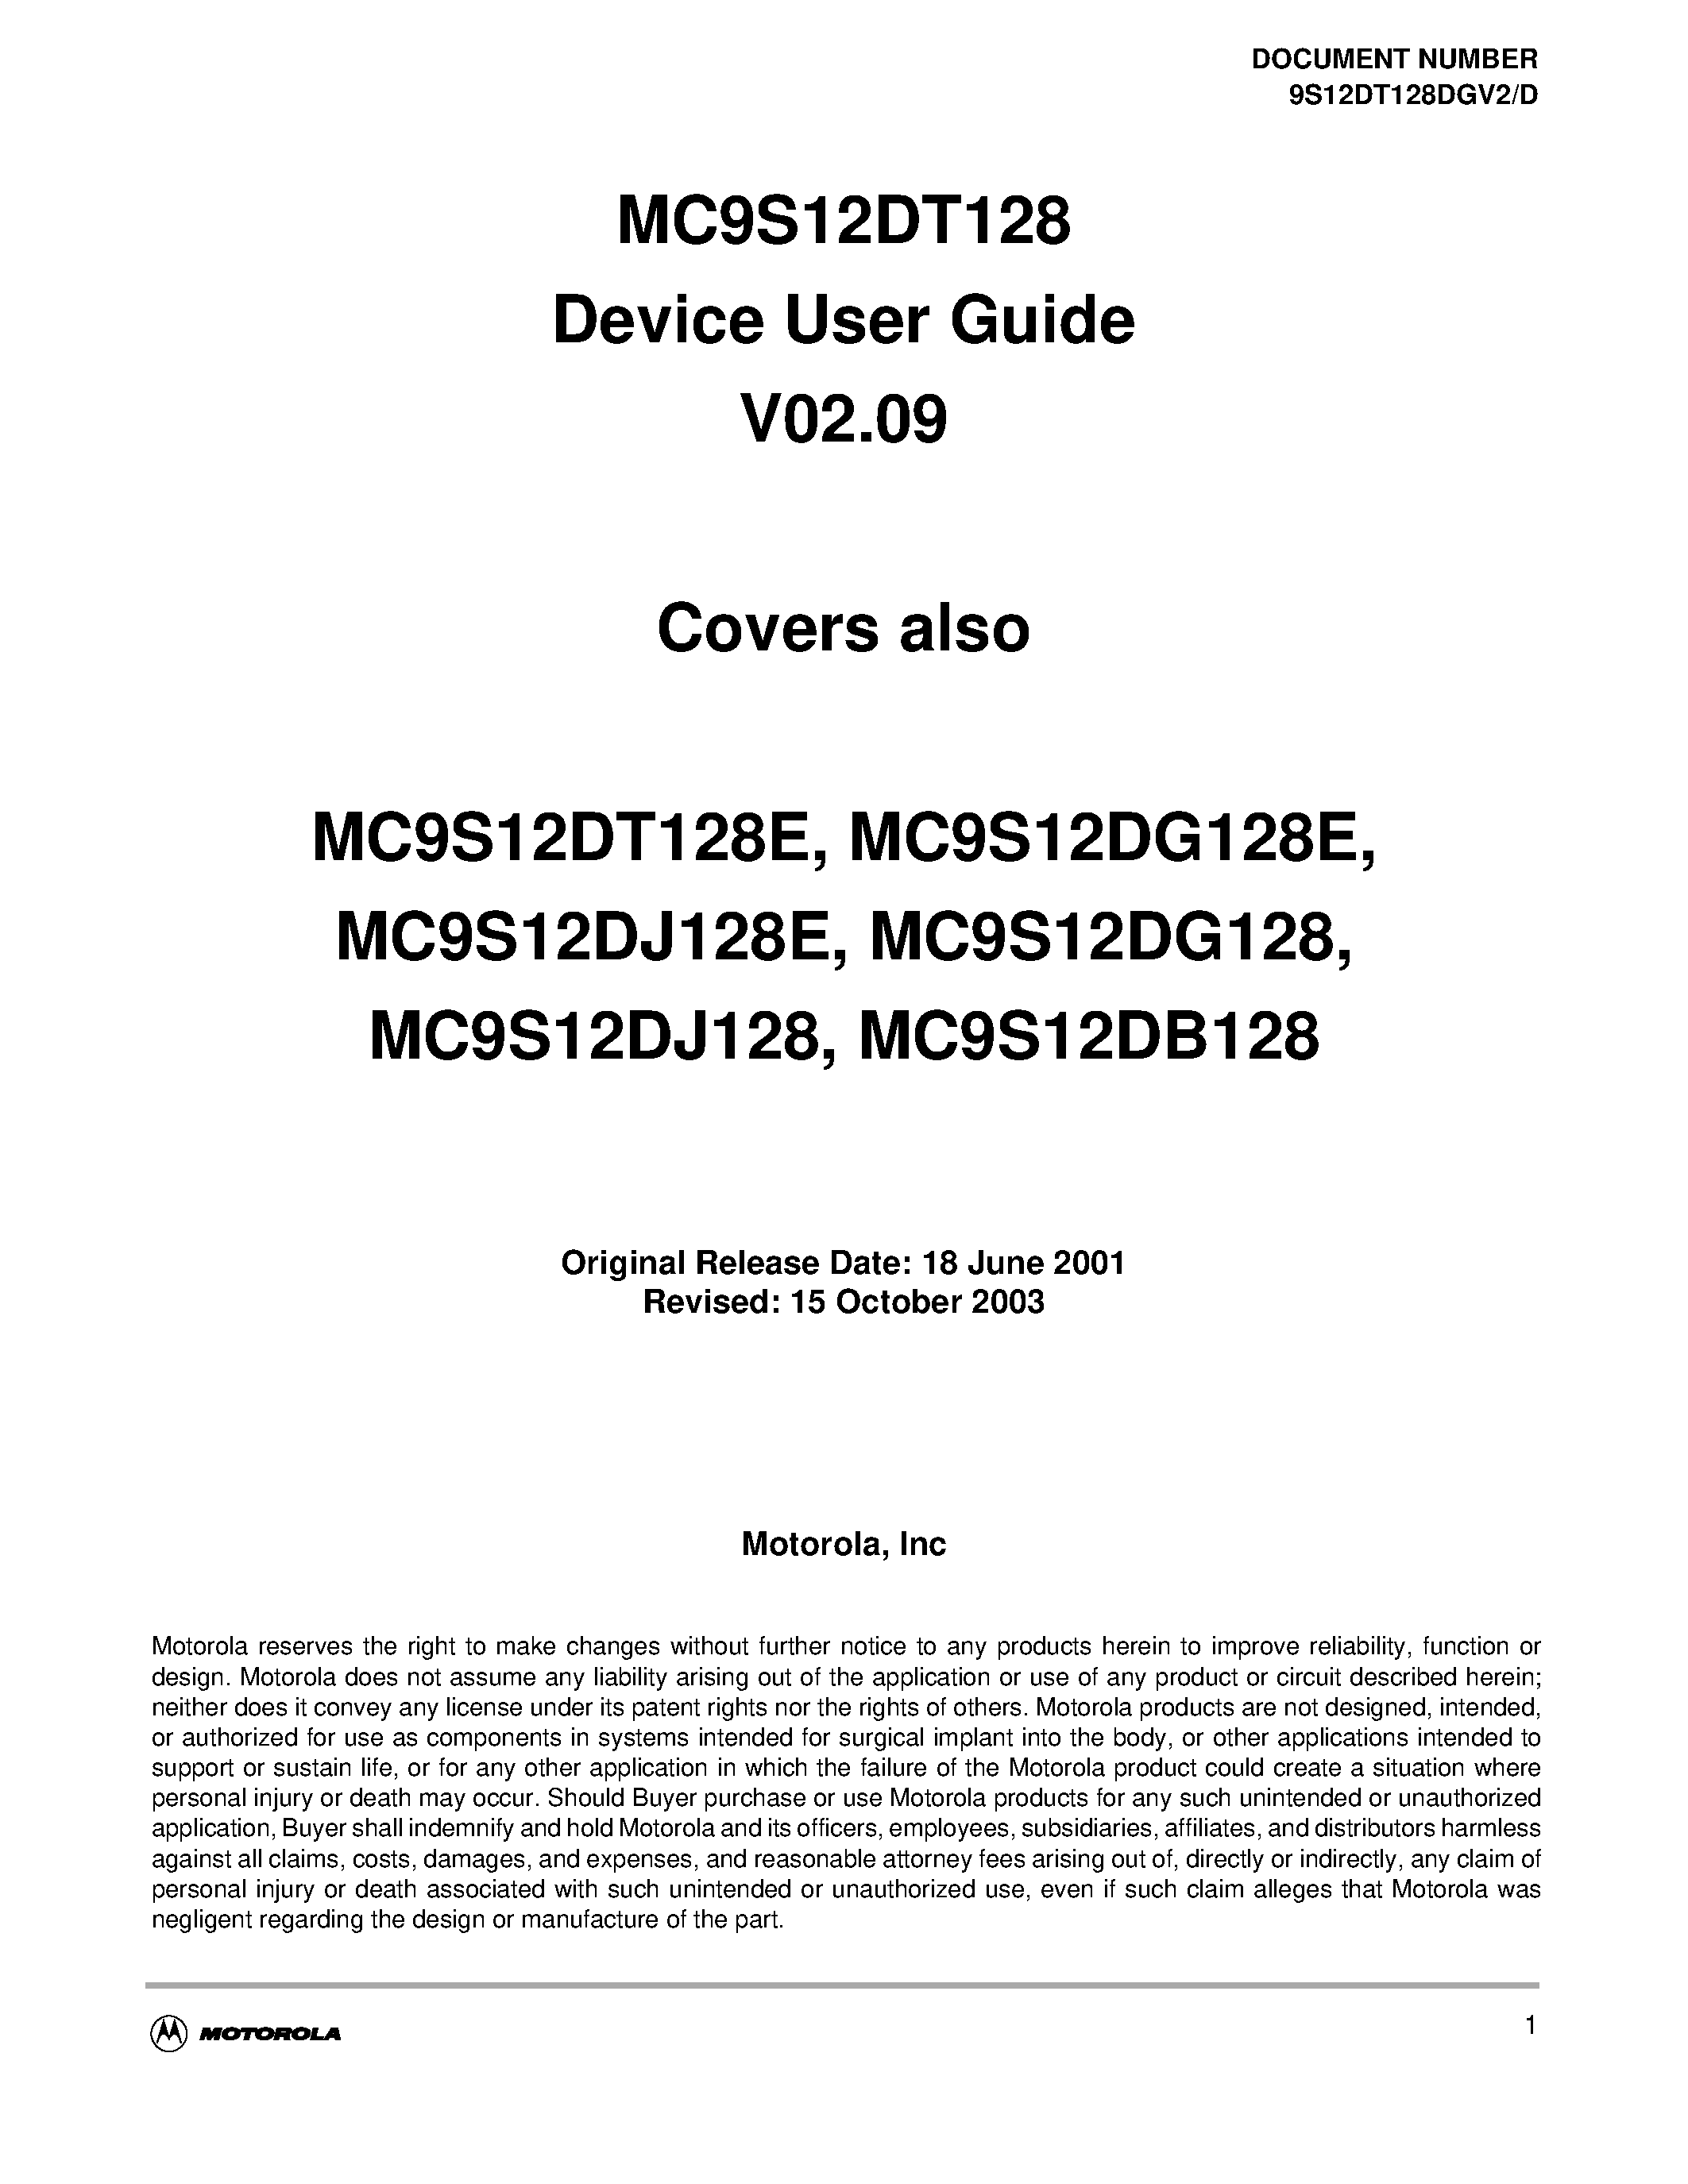 Даташит S12BKPV1D - MC9S12DT128 Device User Guide V02.09 страница 1